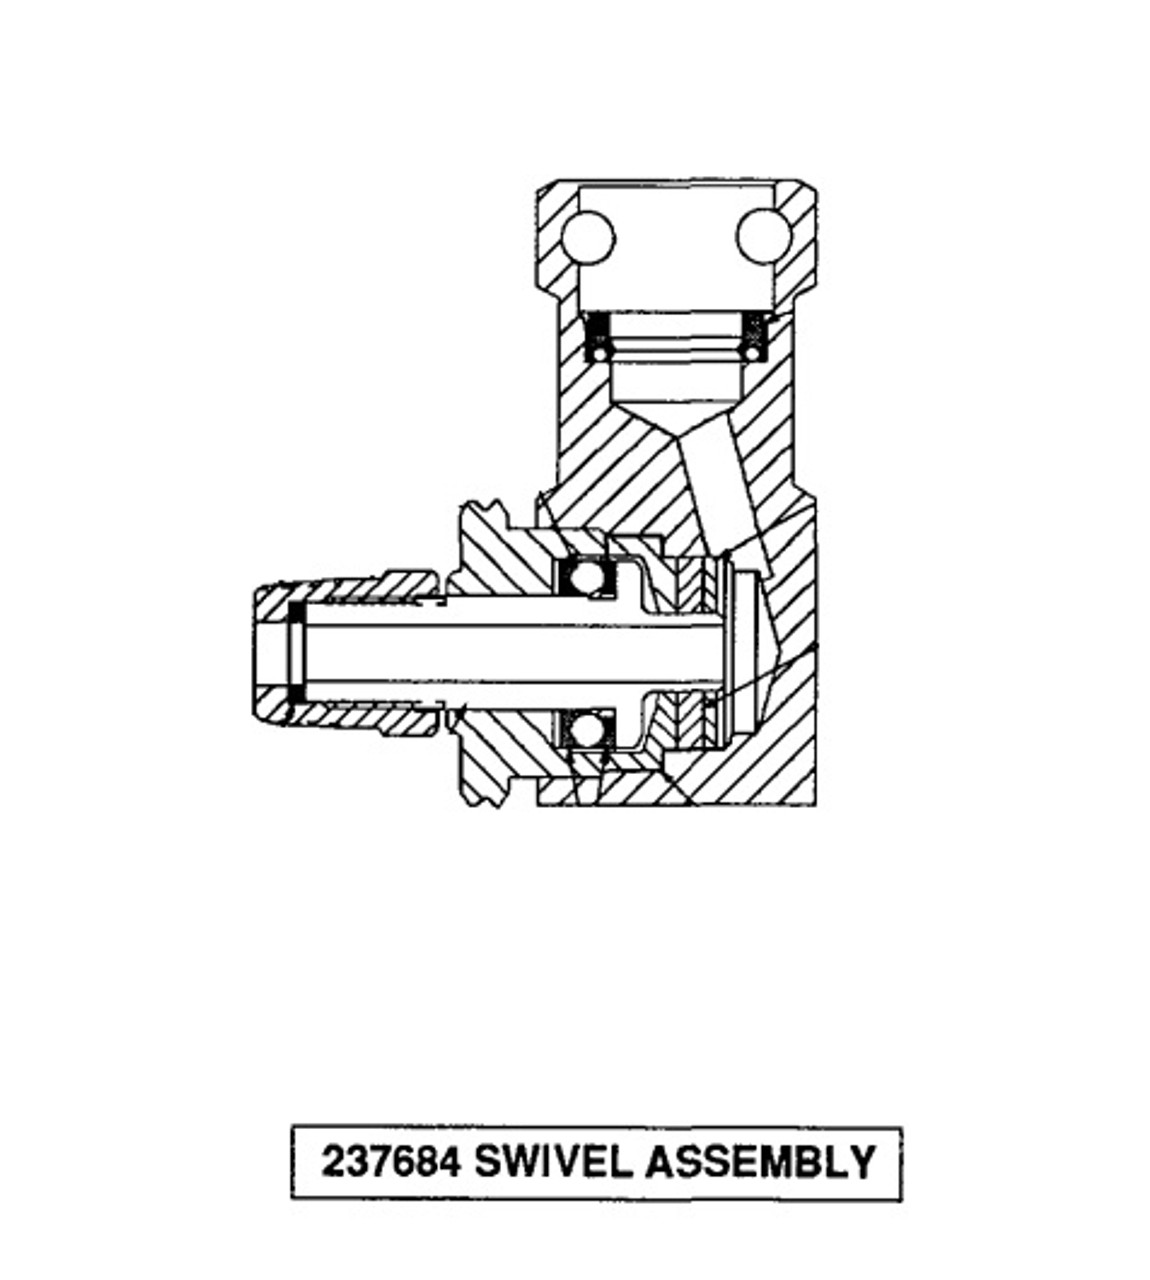 Lincoln Swivel Assembly for Bare Reel Model No. 82206-1 - 237684